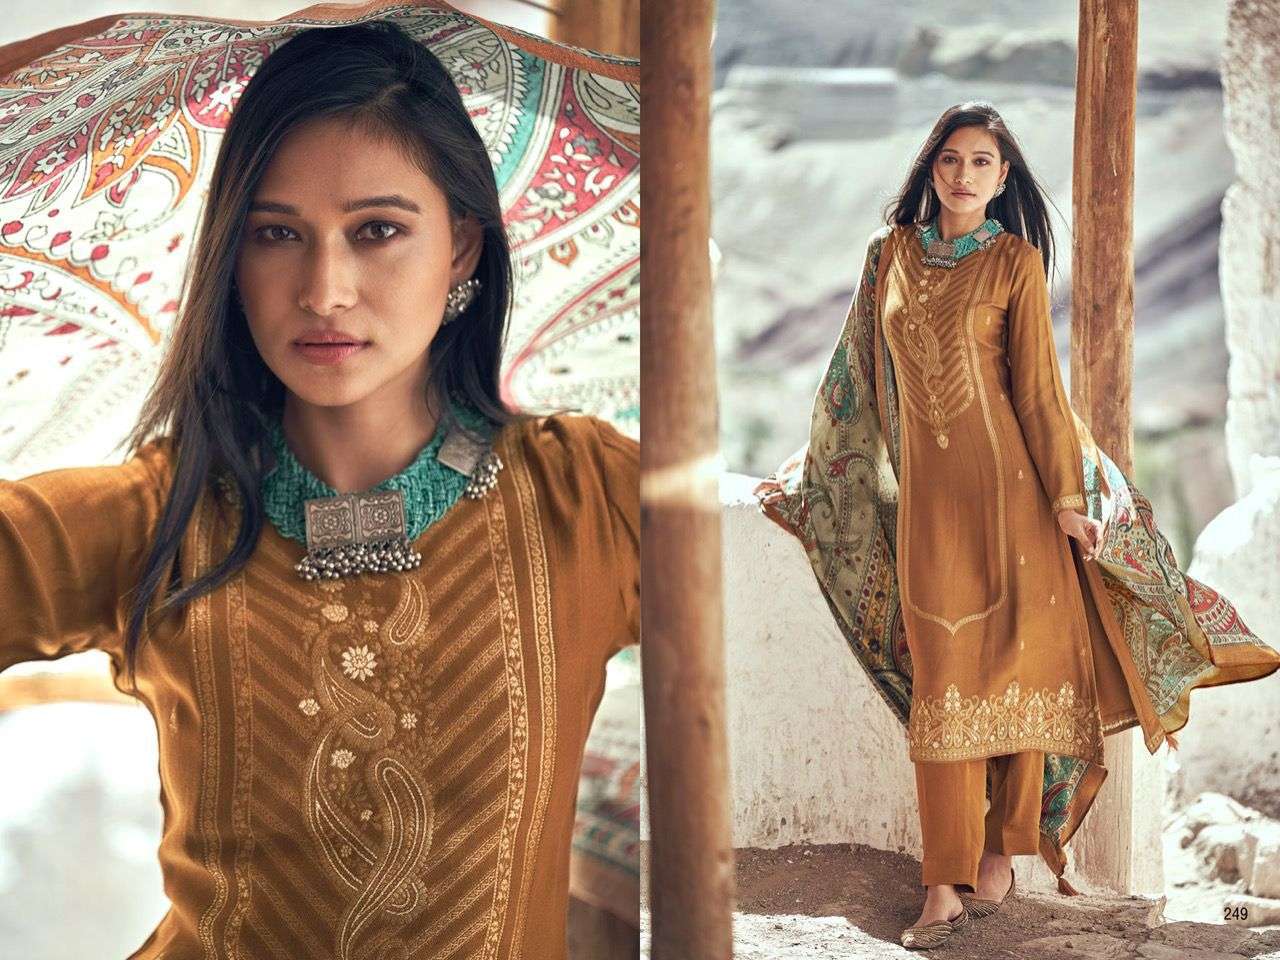 aiqa silk of india 248-255 series woollen pashmina designer dress material collection surat